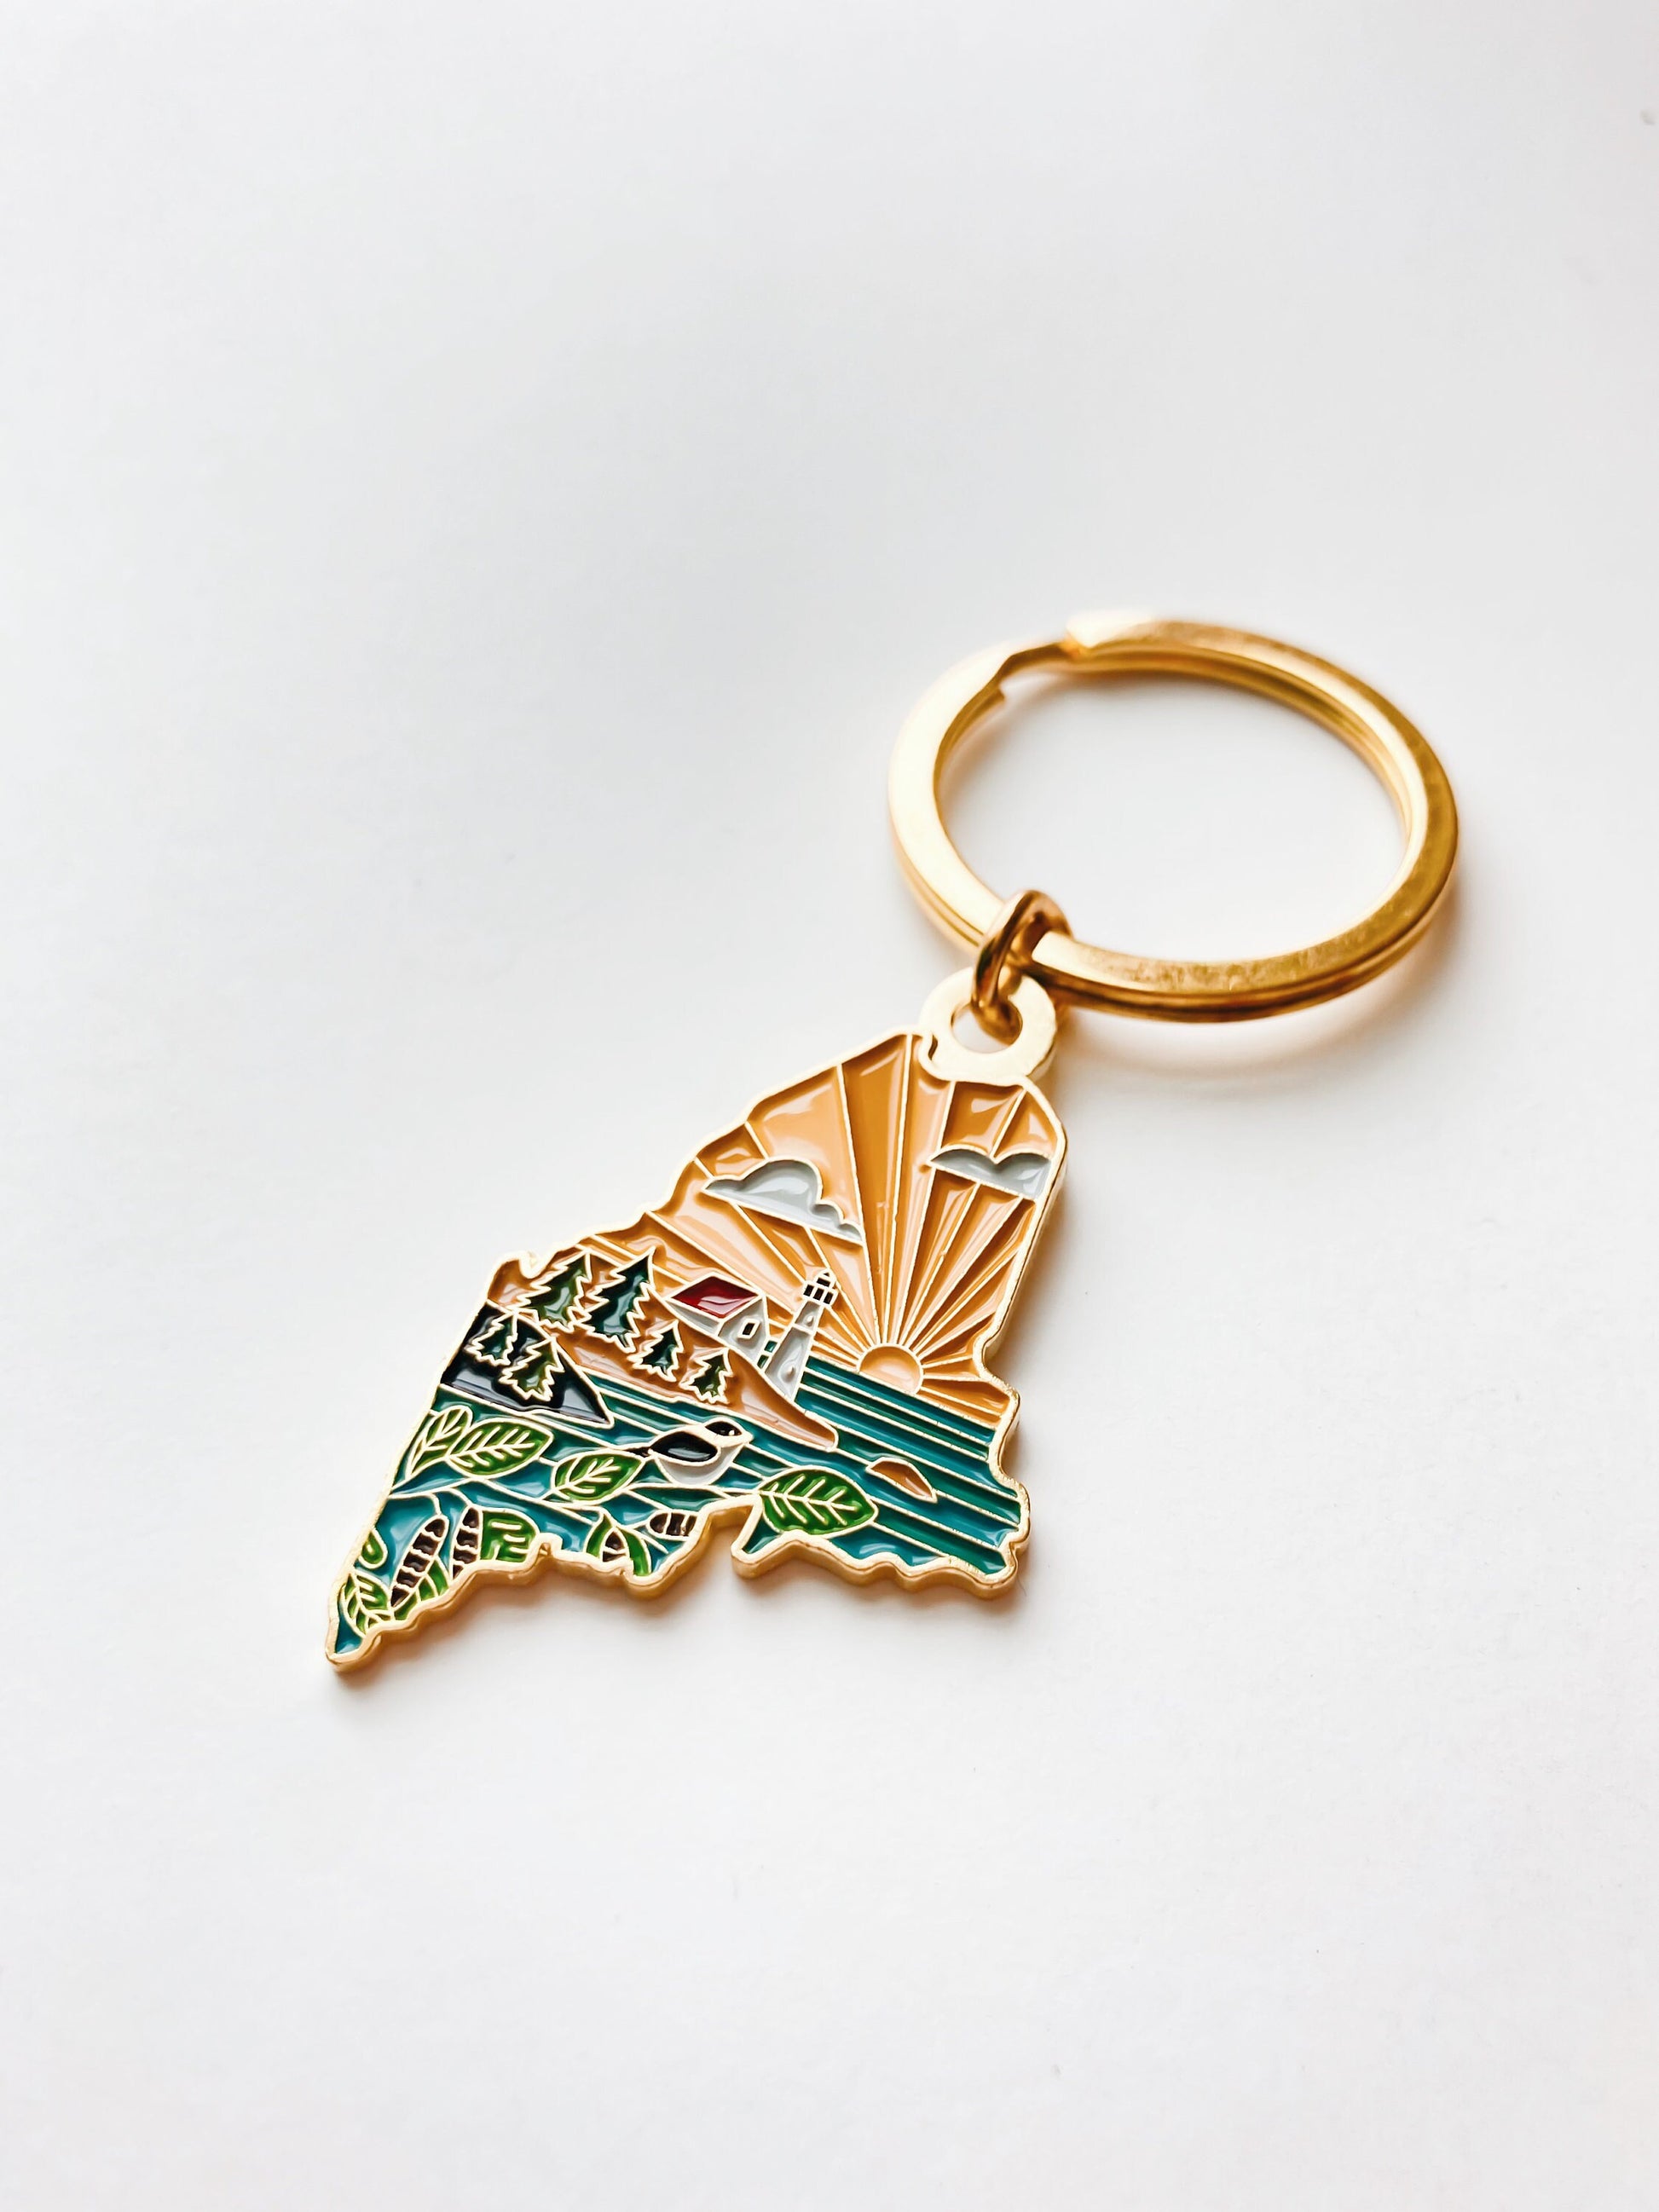 Maine Gold Enamel Keychain | Maine State Key Ring | Soft Enamel Illustrated State Keychain 1.5"